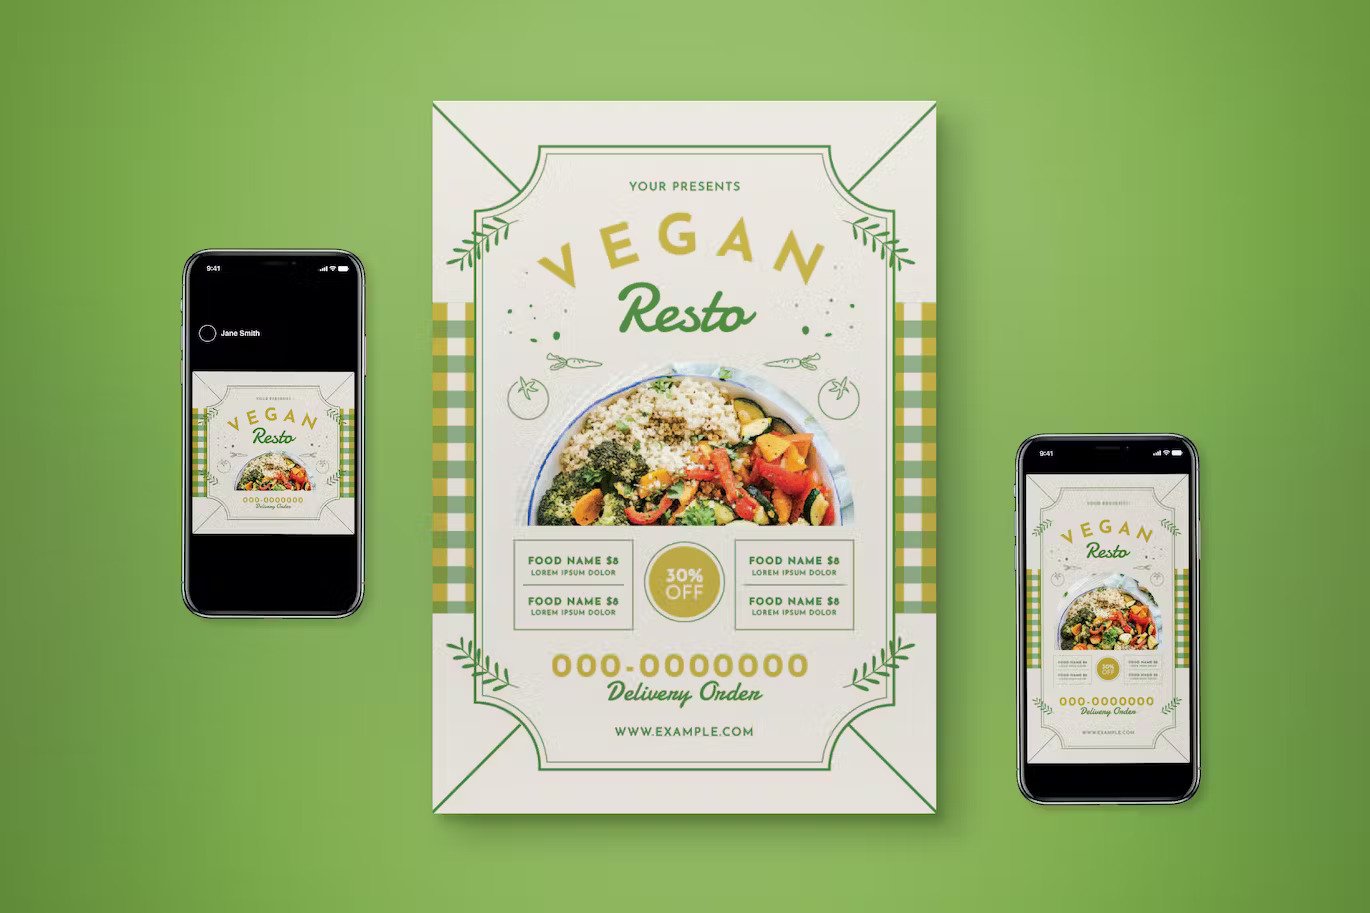 A vegan menu promotion flyer